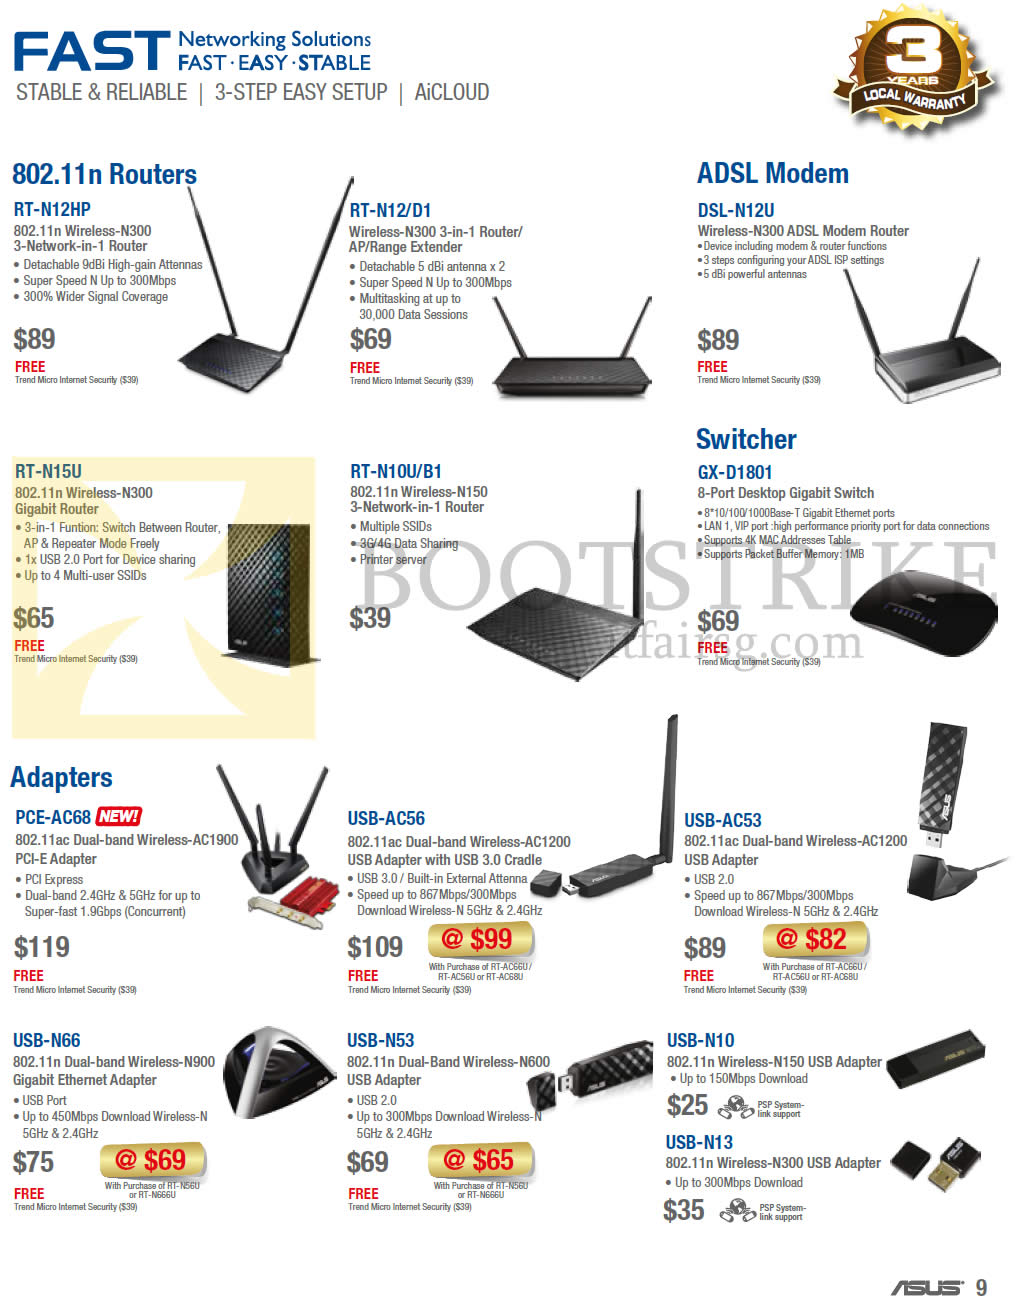 IT SHOW 2014 price list image brochure of ASUS Networking Wireless Routers, Adapters, Modem, RT-N12HP, Rt-N15U, RT-N12D1, RT-N10UB1, DSL-N12U, GX-D1801, PCE-AC68, USB-N66 AC56 N53 AC56 N10 N13